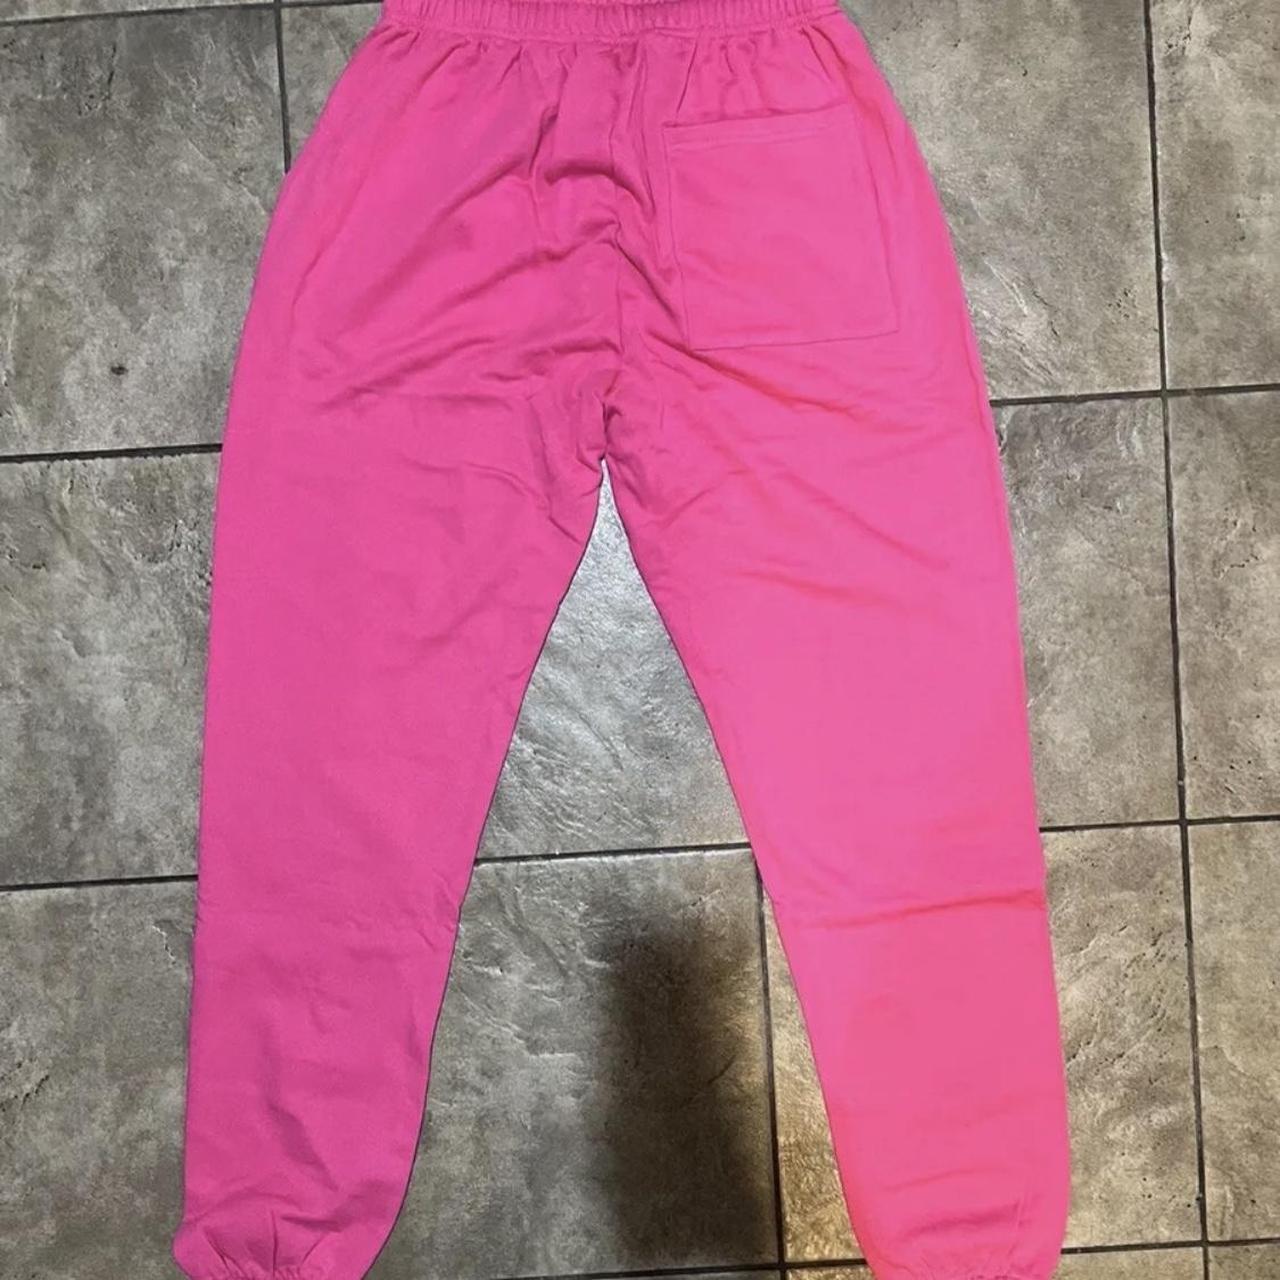 Medium Pink Sp5der Pants ONLY TAKE APPLE PAY - Depop